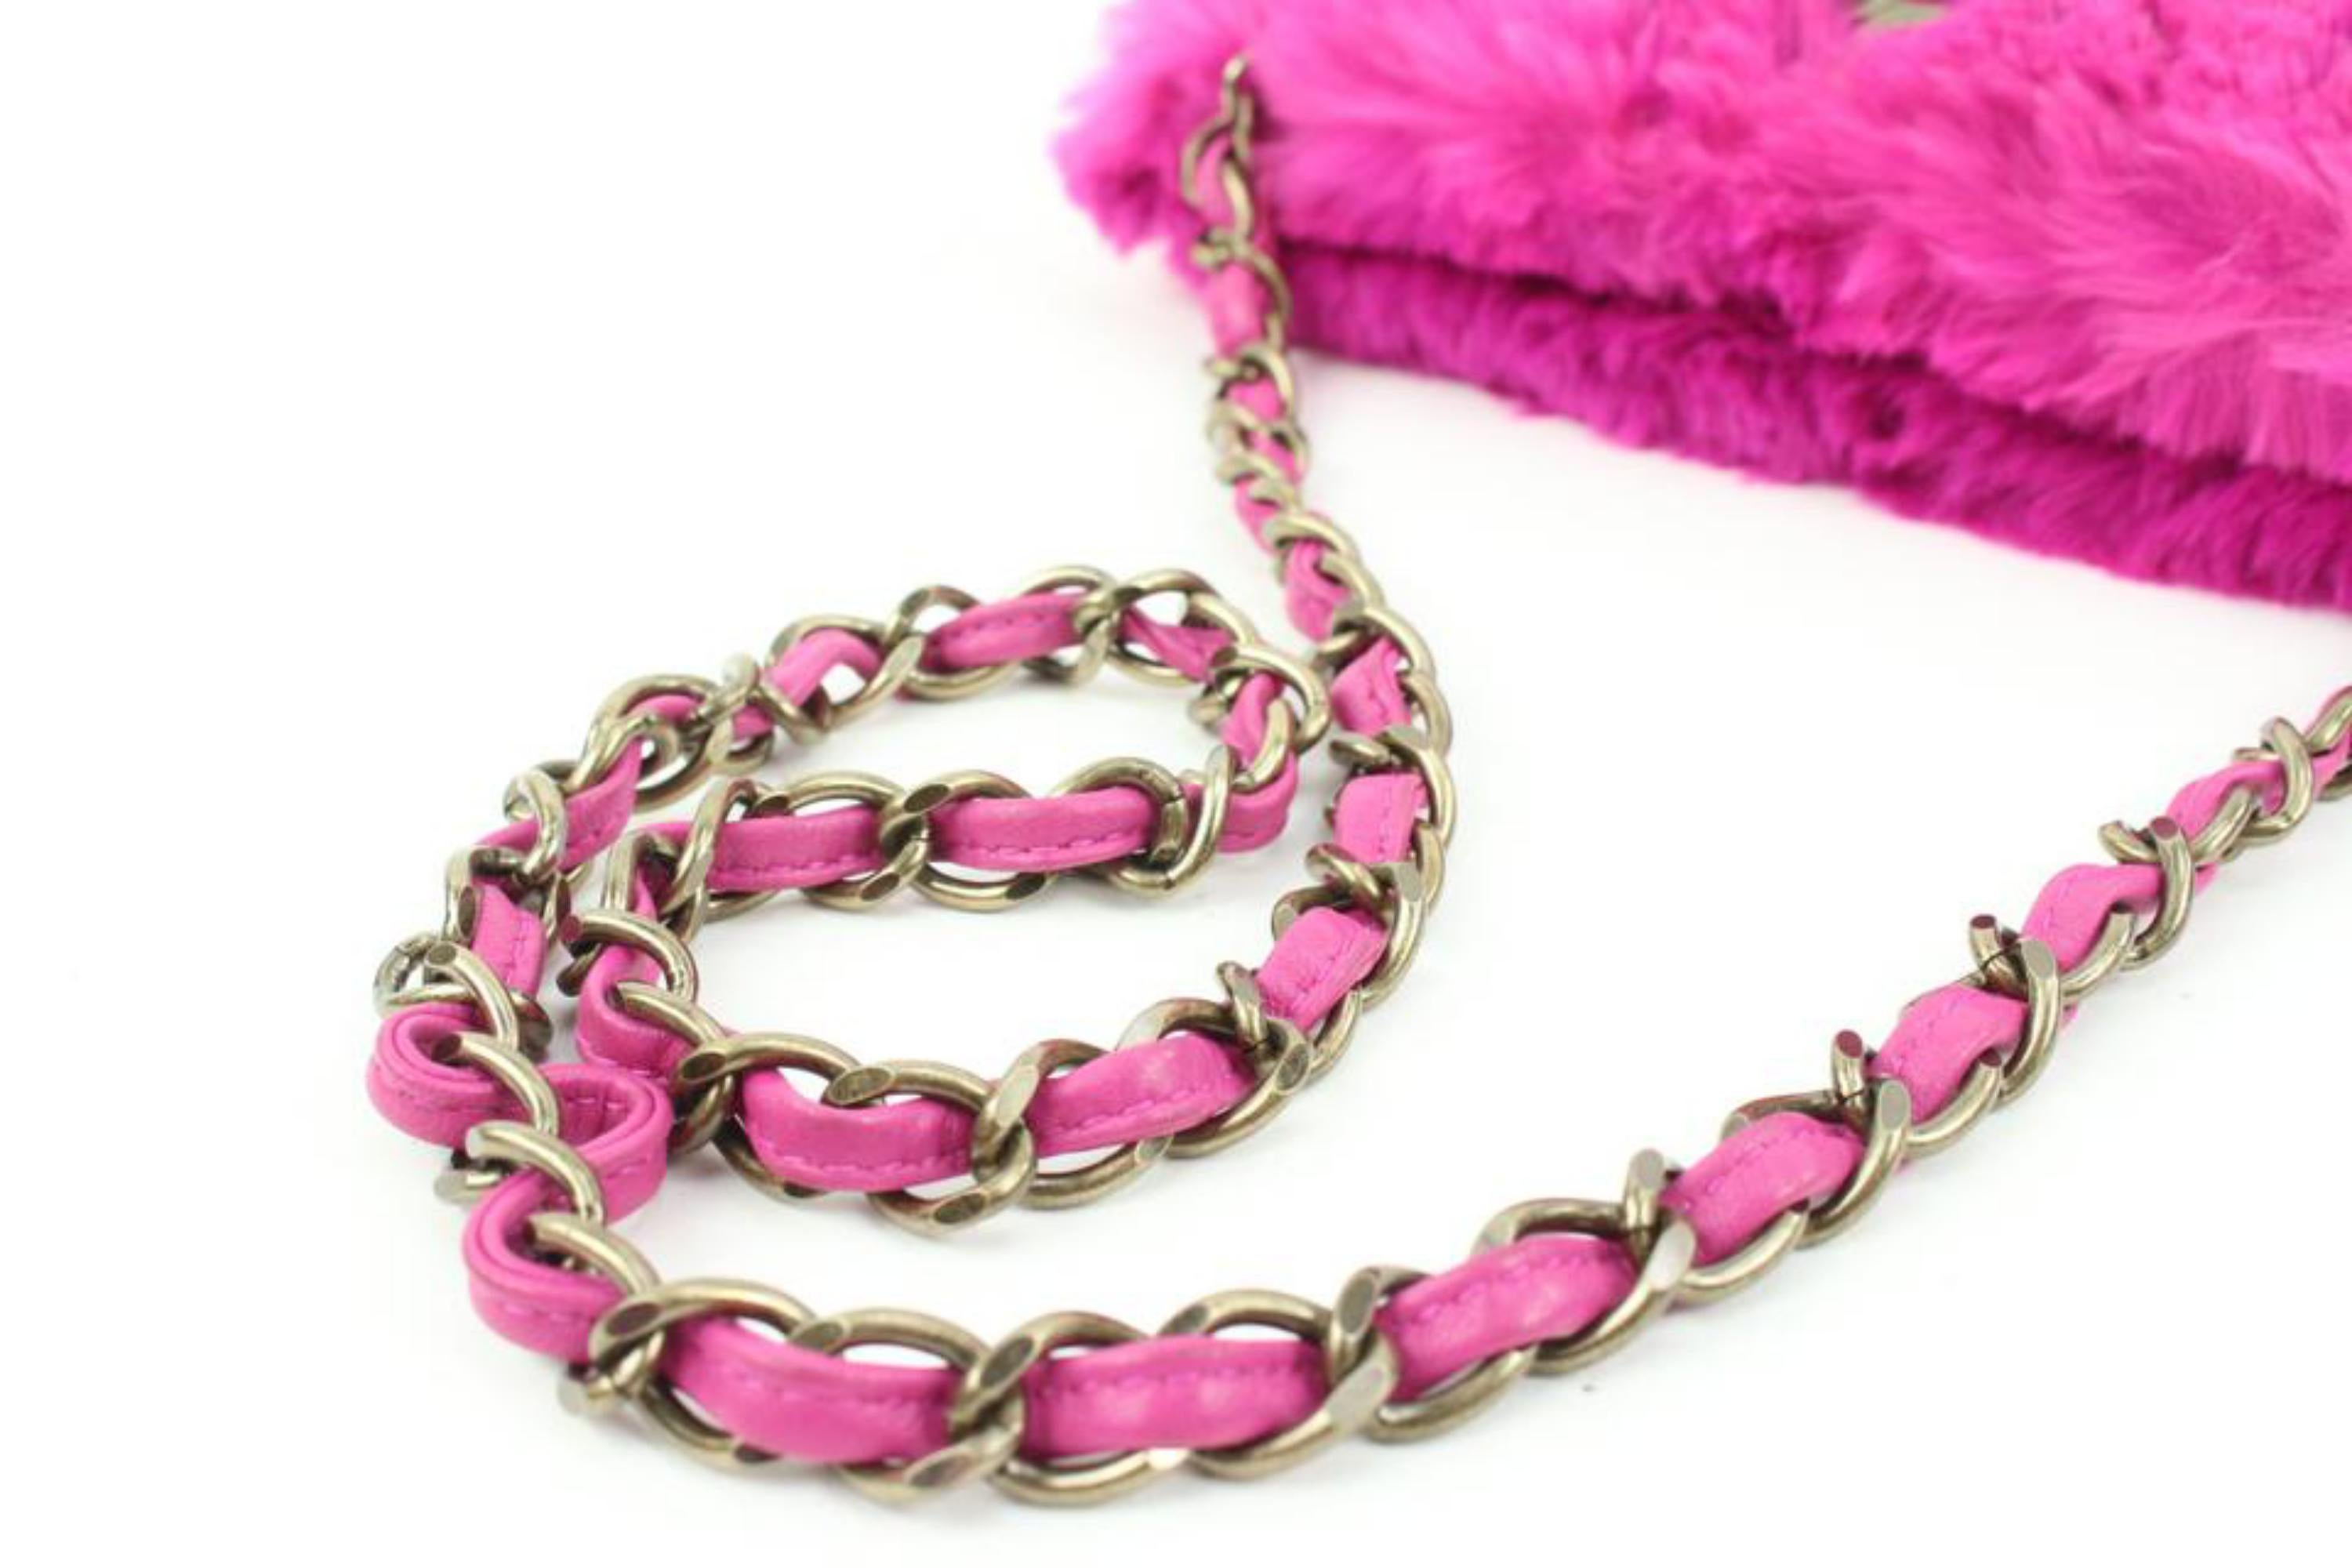 Chanel Fuchsia Pink Rabbit Fur Chain Shoulder Bag 57c128s 2